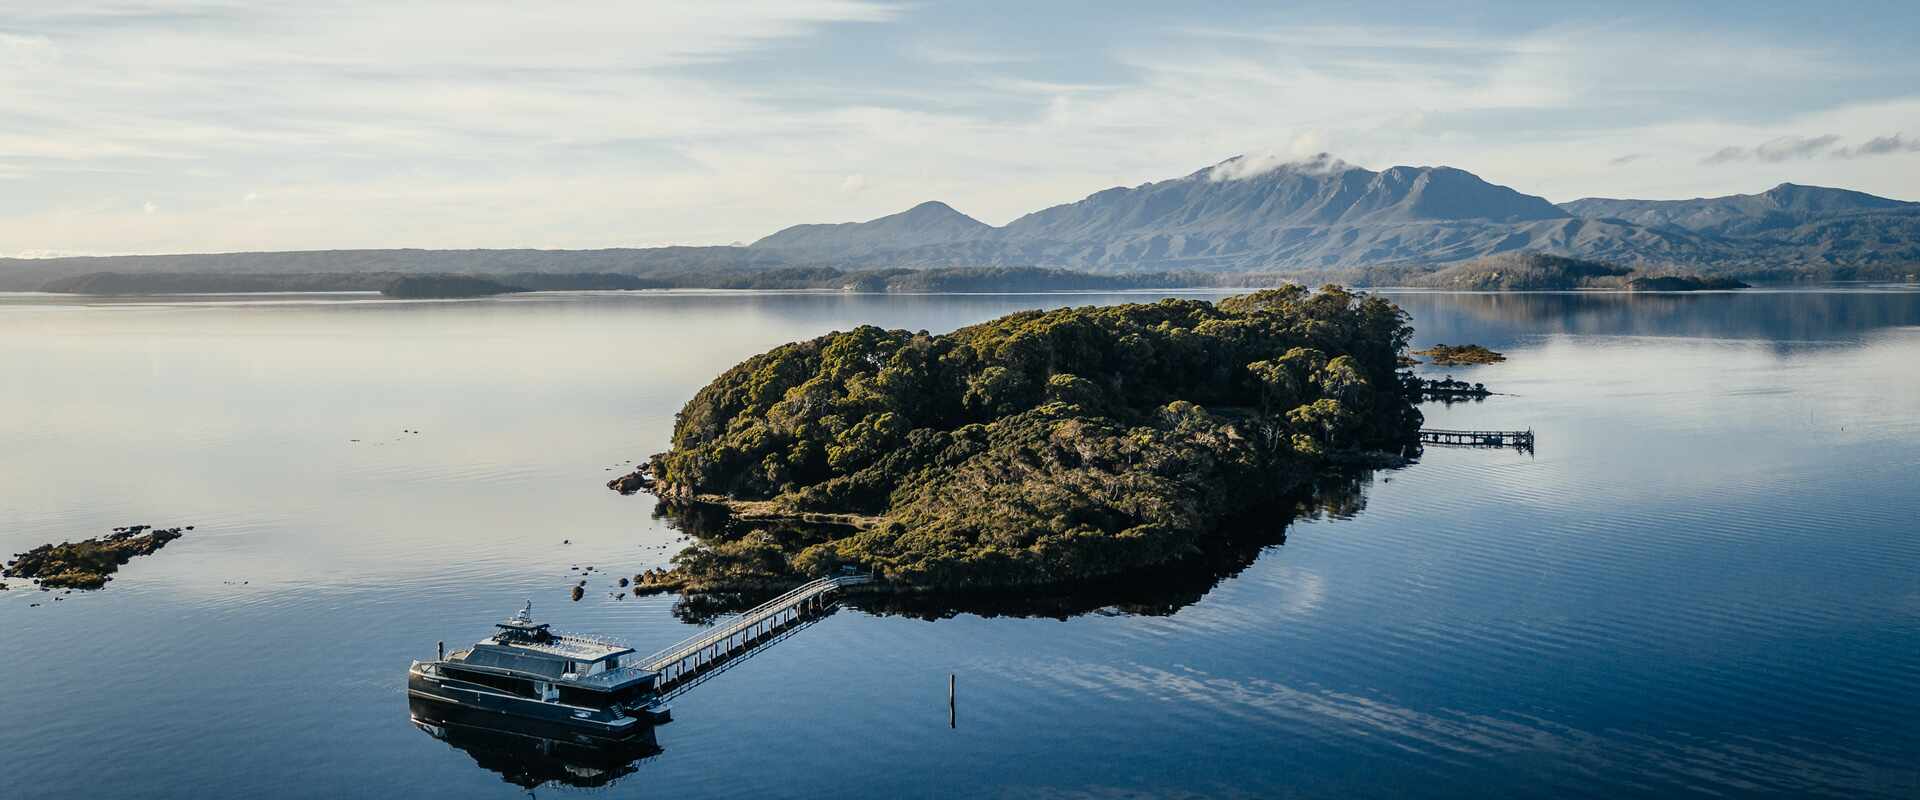 Aerial view of Gordon River catamaran moored at small island, Tasmania